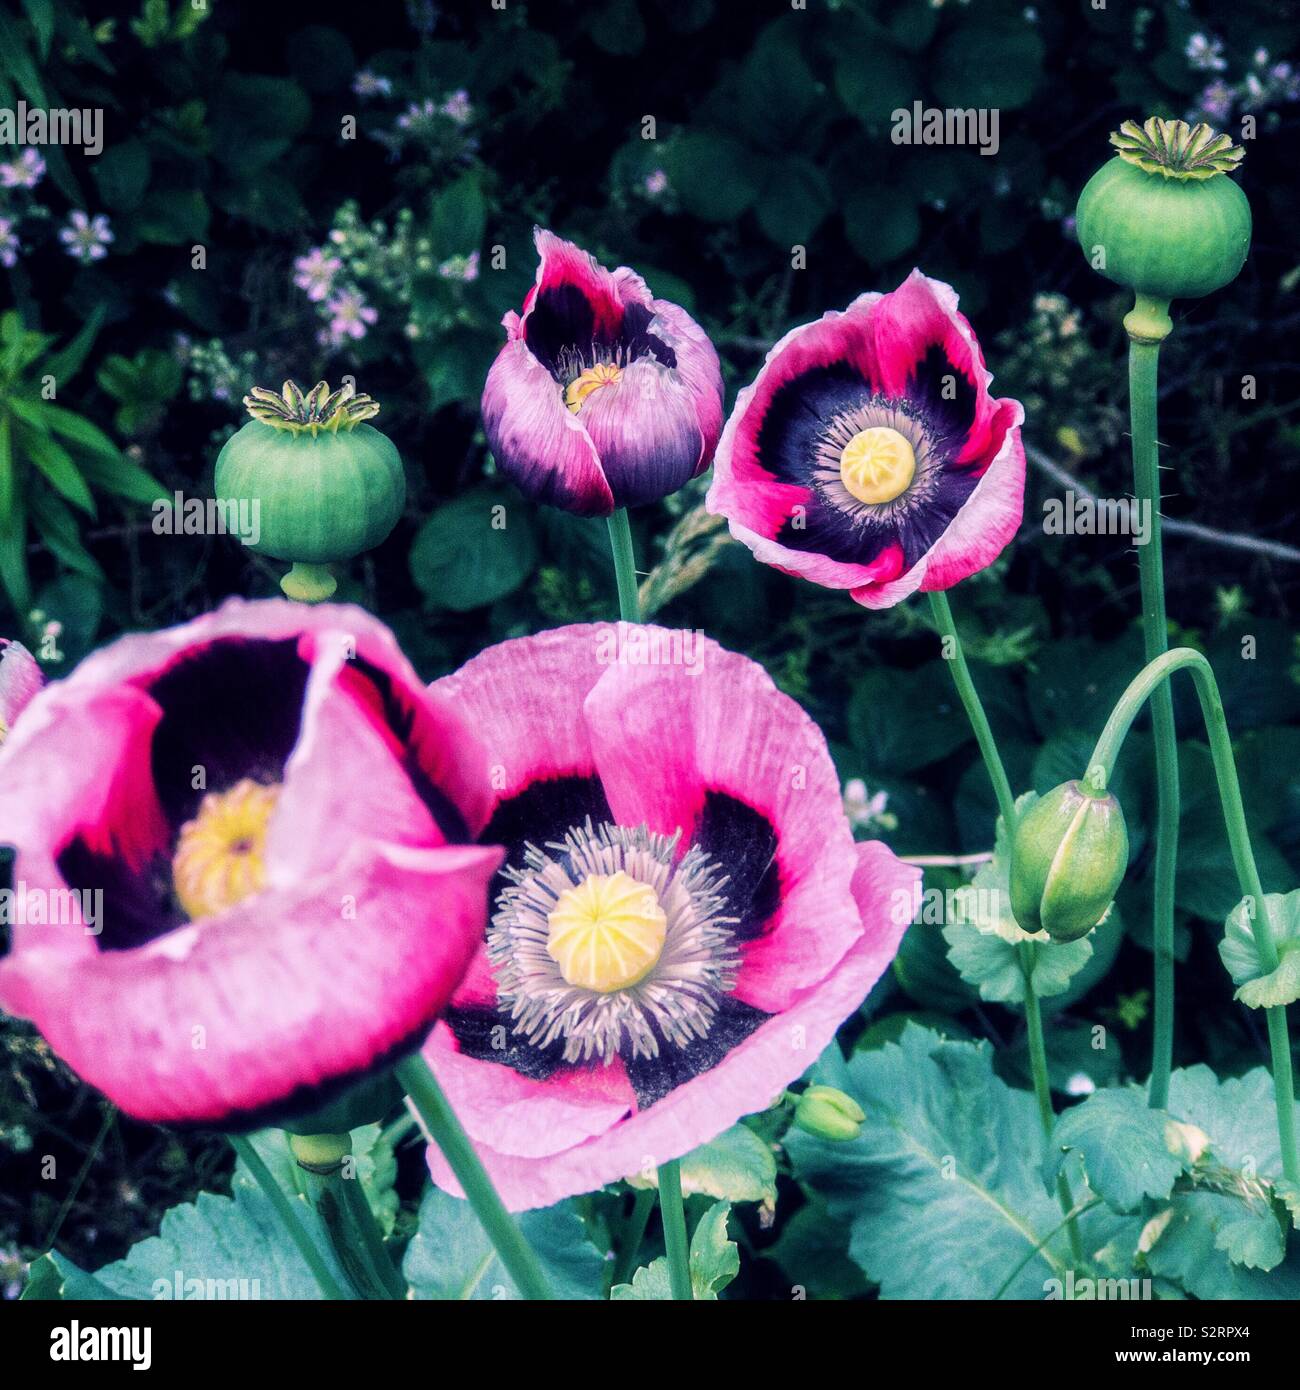 Rosa Mohn Blumen und Samen Köpfen. Stockfoto